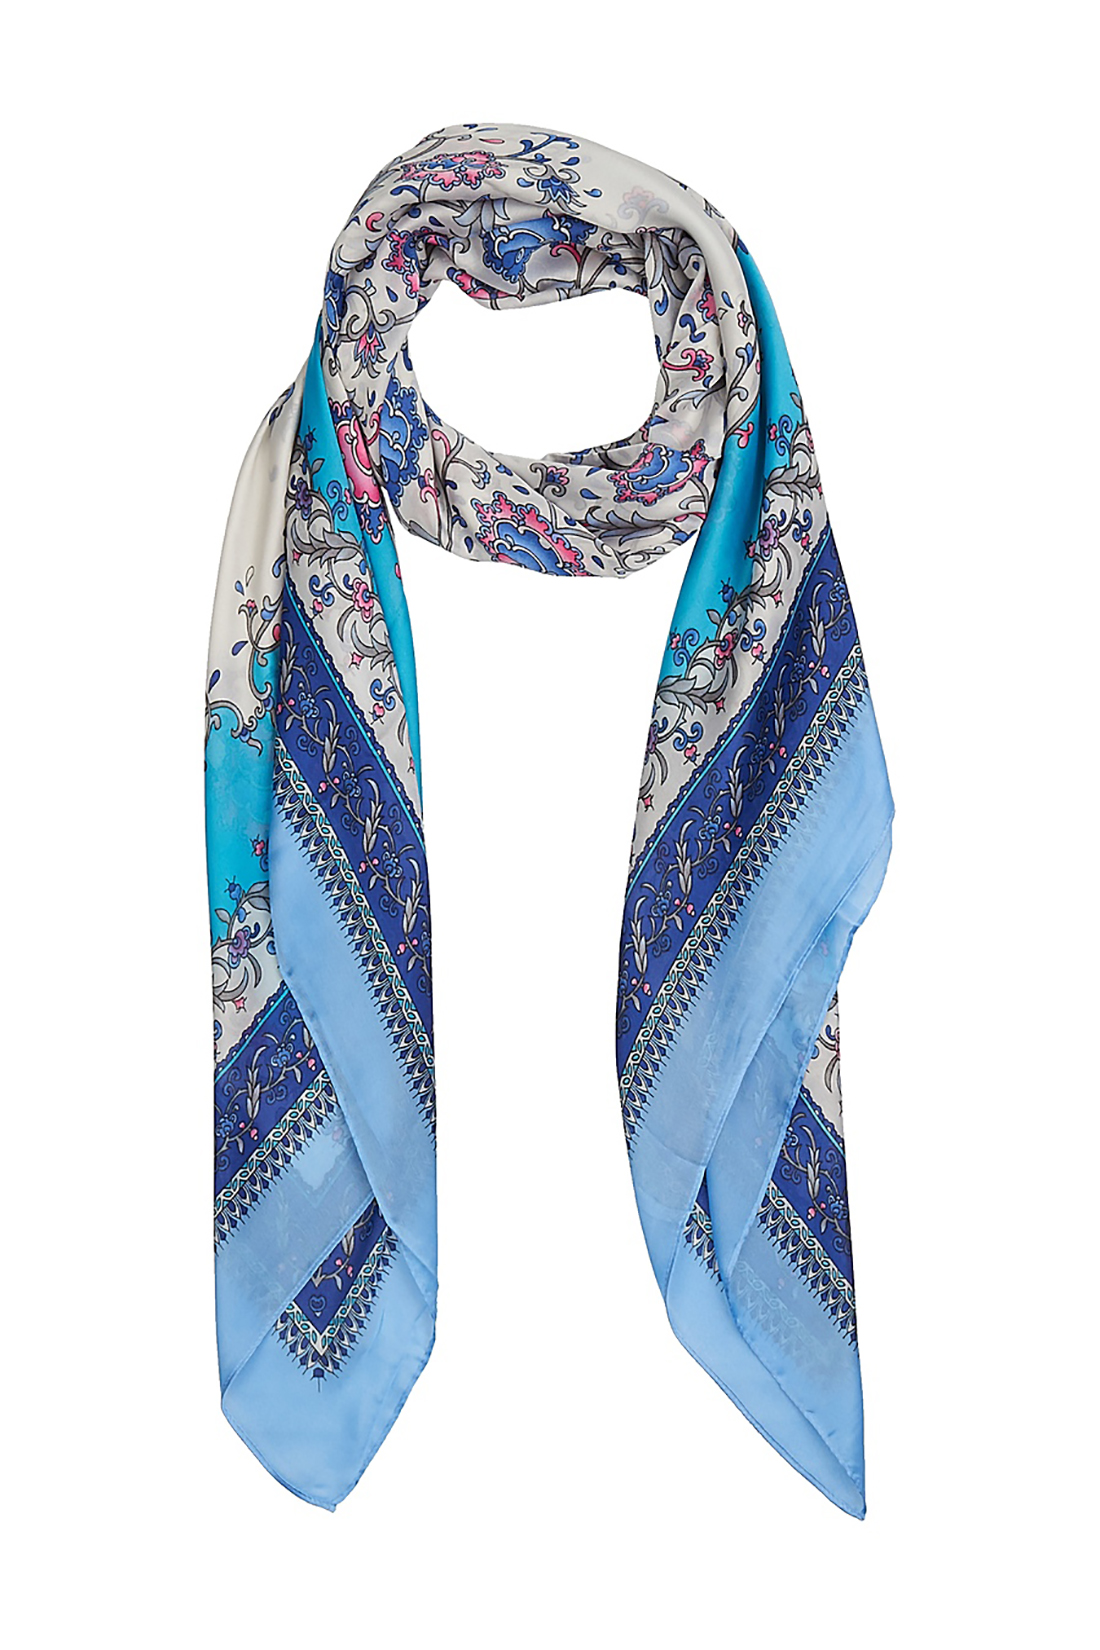 Шёлковый шарф с узором (арт. baon B358048), размер Без/раз, цвет angel blue printed#голубой